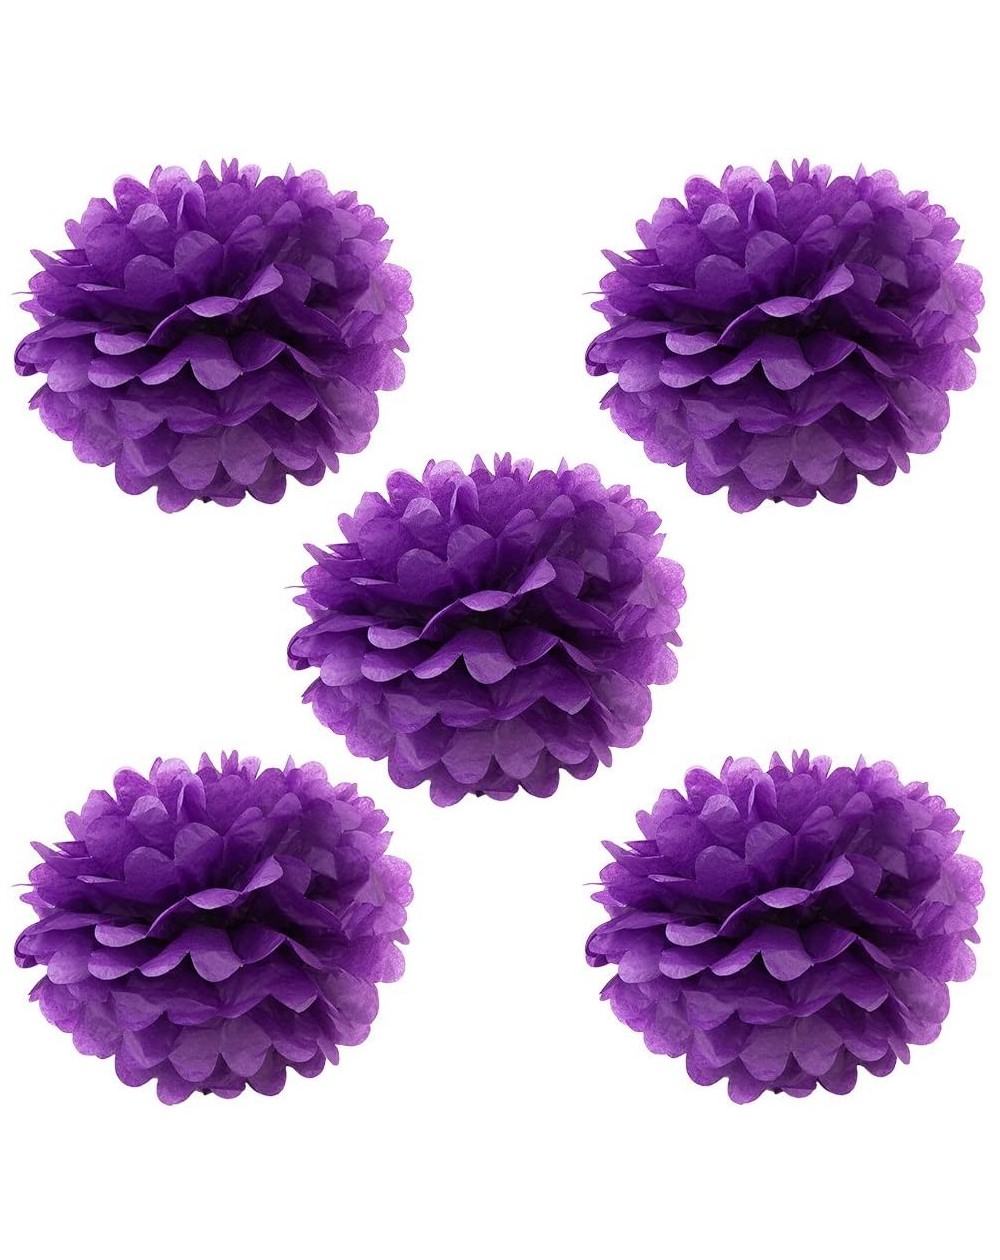 Tissue Pom Poms Set of 5 - Purple 8" - (5 Pack) Tissue Pom Poms Flower Party Decorations for Weddings- Birthday- Bridal- Baby...